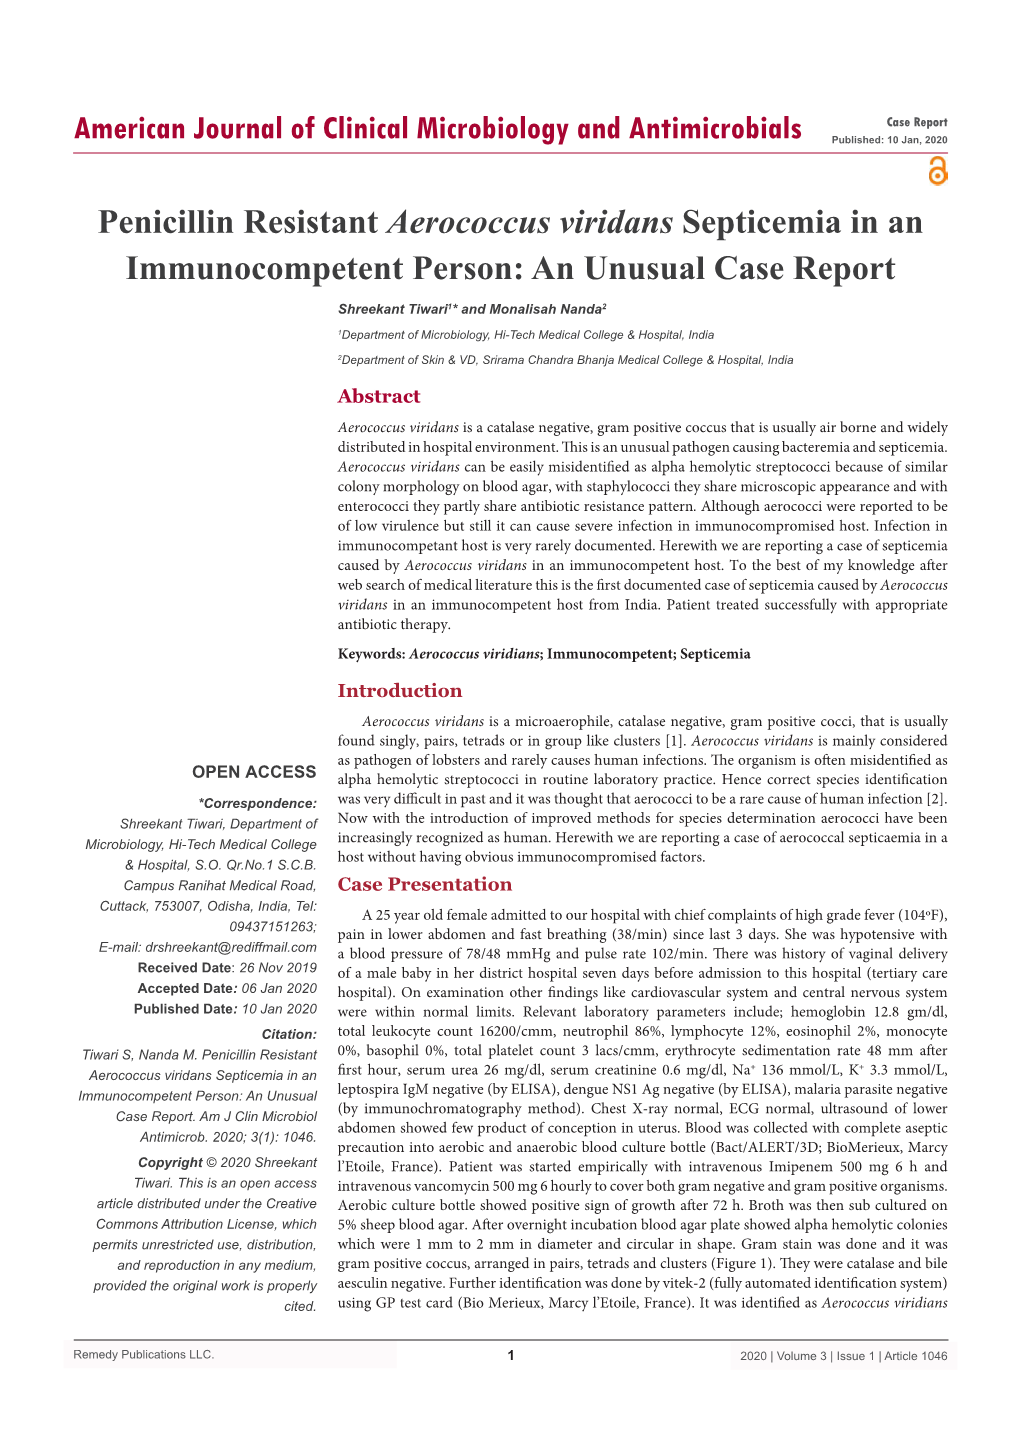 Penicillin Resistant Aerococcus Viridans Septicemia in an Immunocompetent Person: an Unusual Case Report